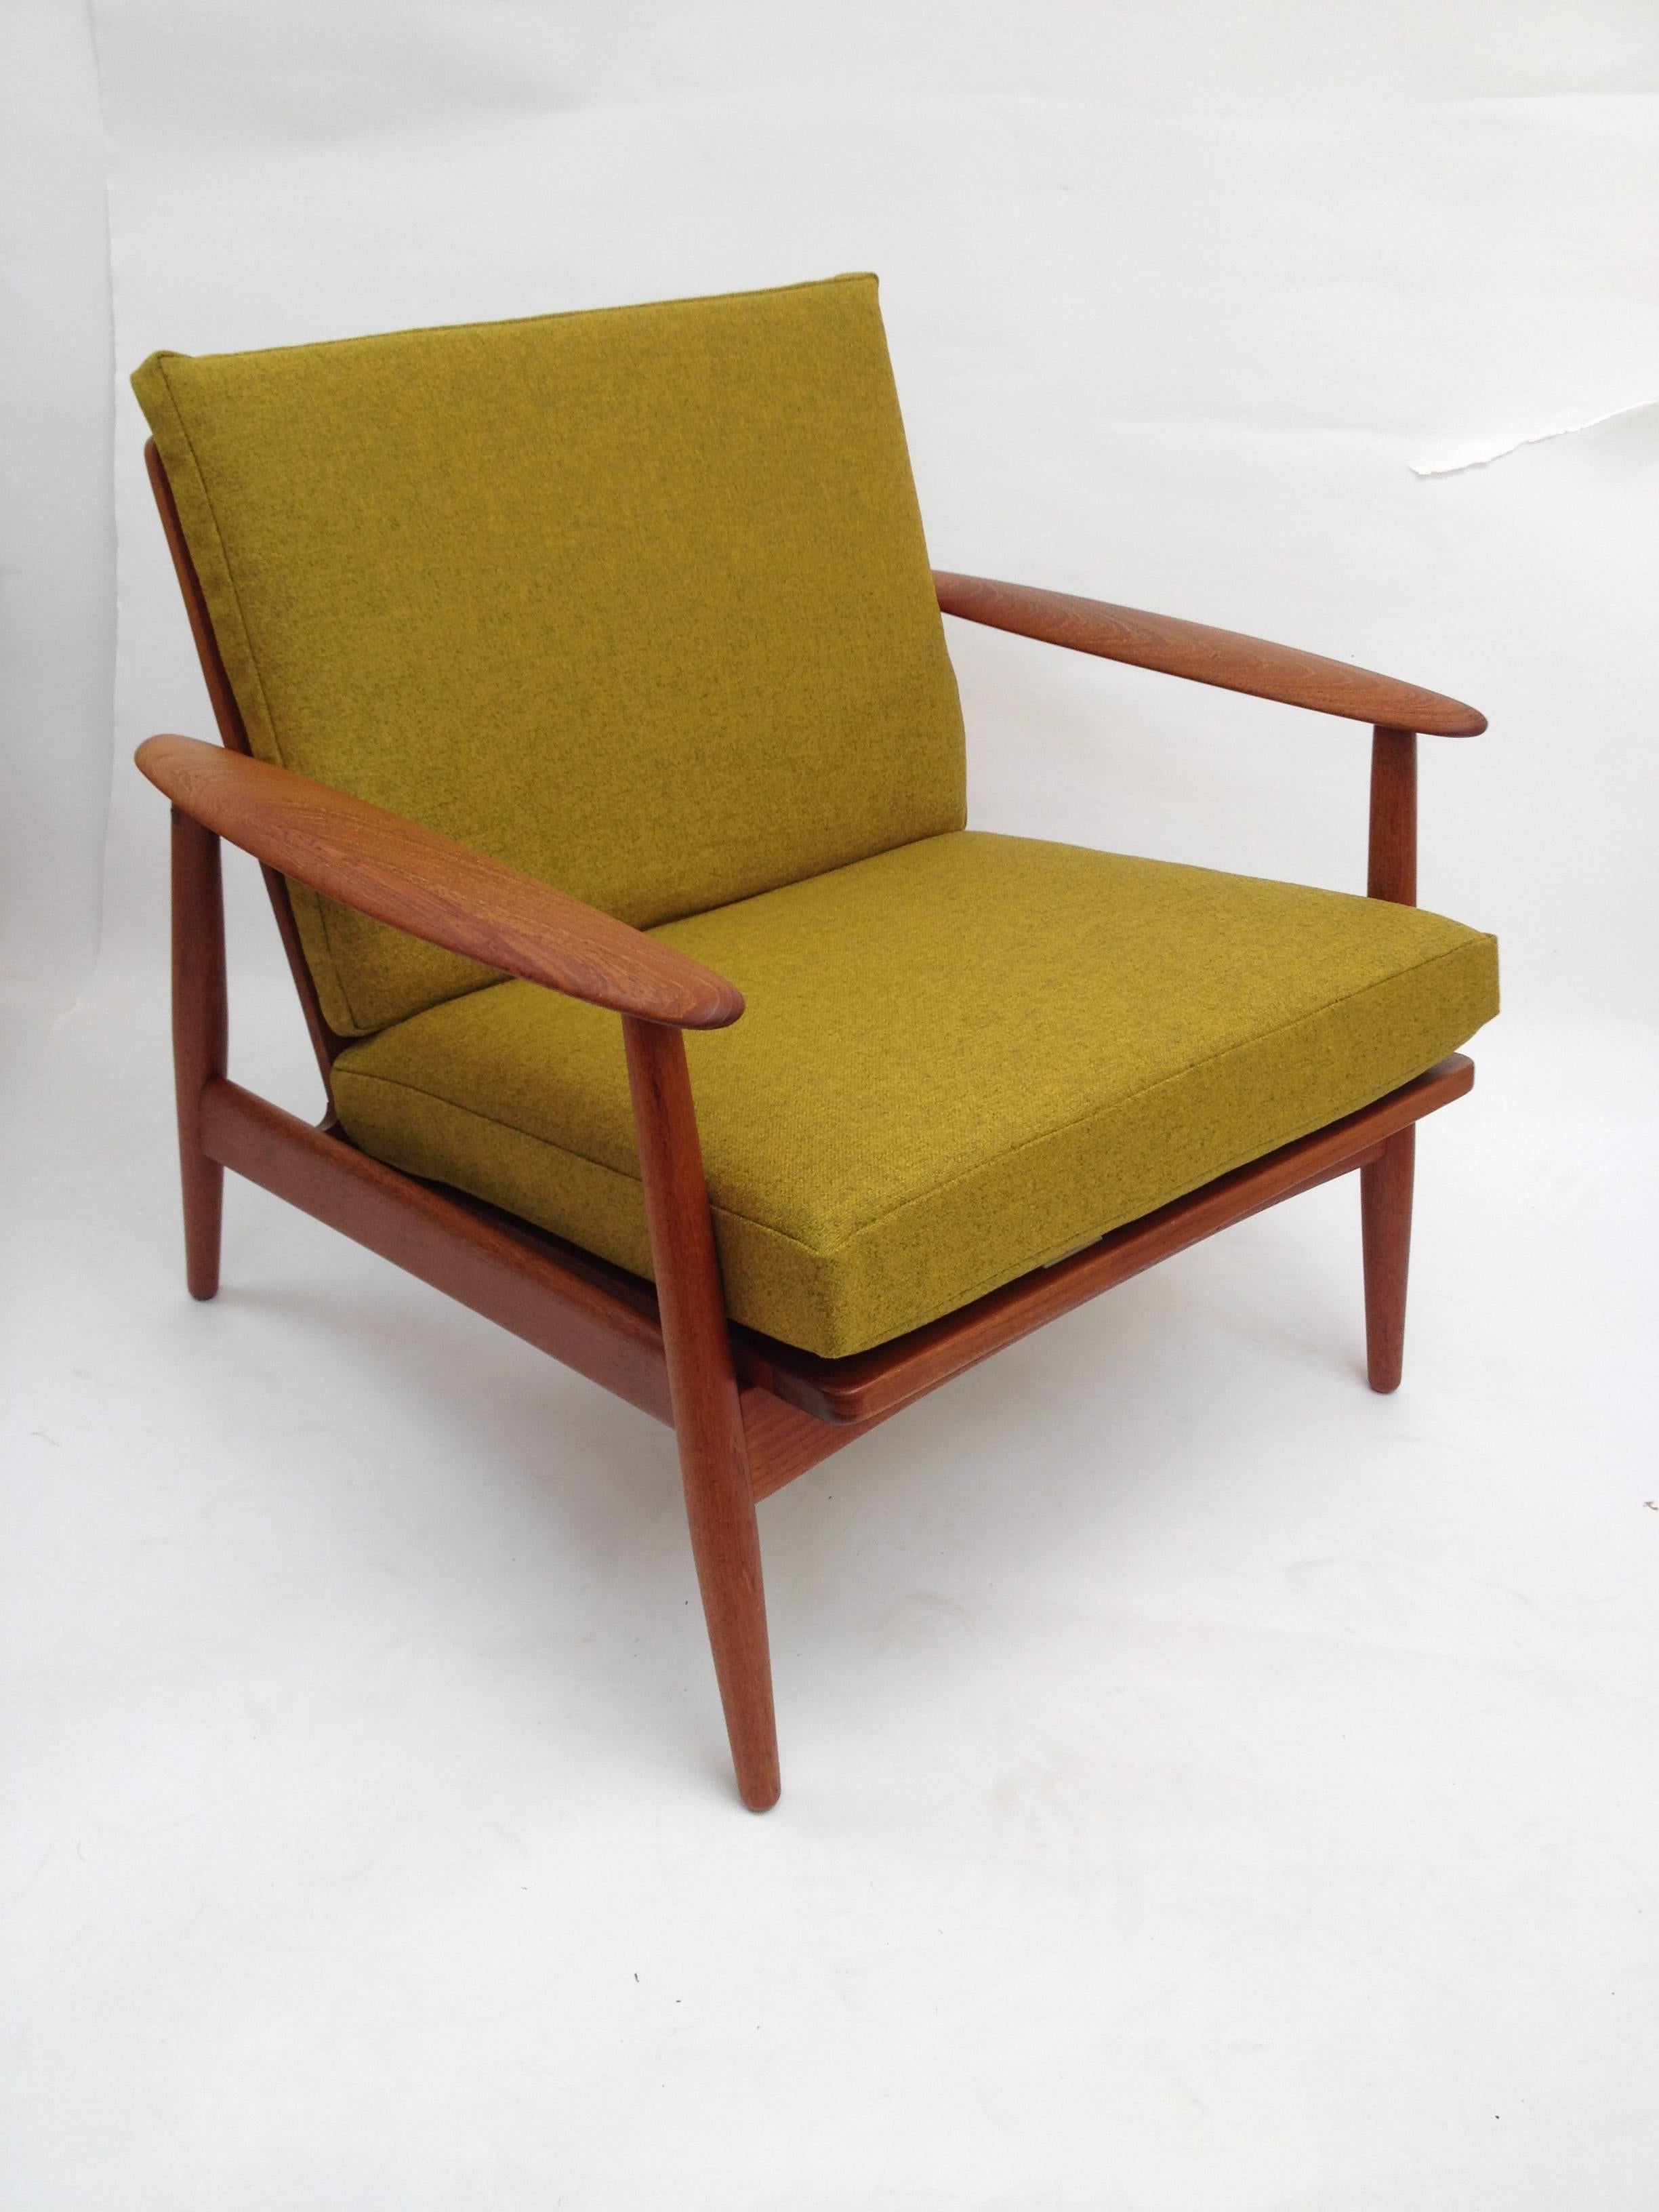 Stunning pair of Mid-Century Modern teak easy chairs - (very similar to the Hans Wegner 